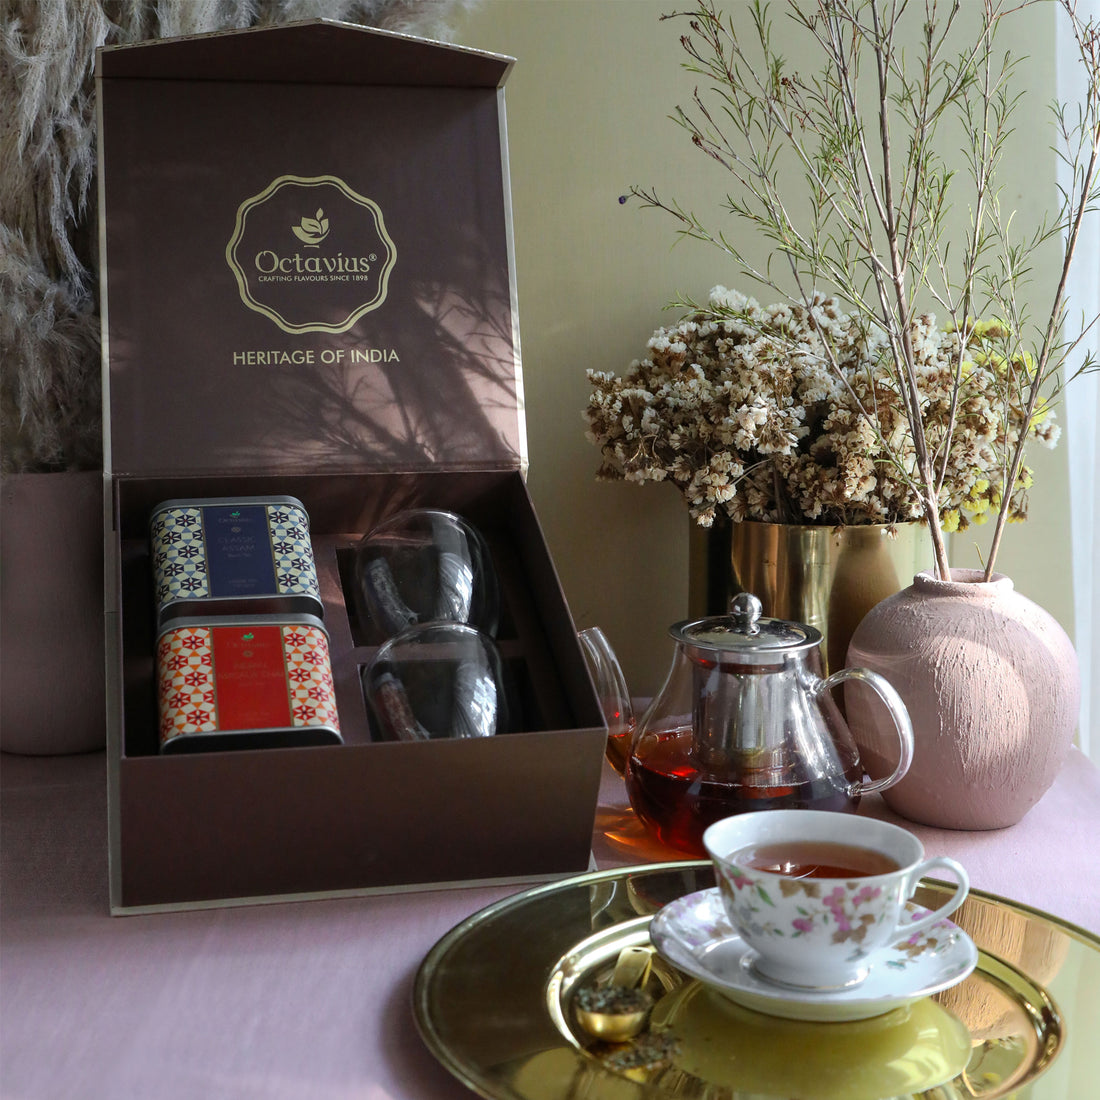 Heritage of India Tea Collection - Couples Delight (Premium Indian Black Tea Range)